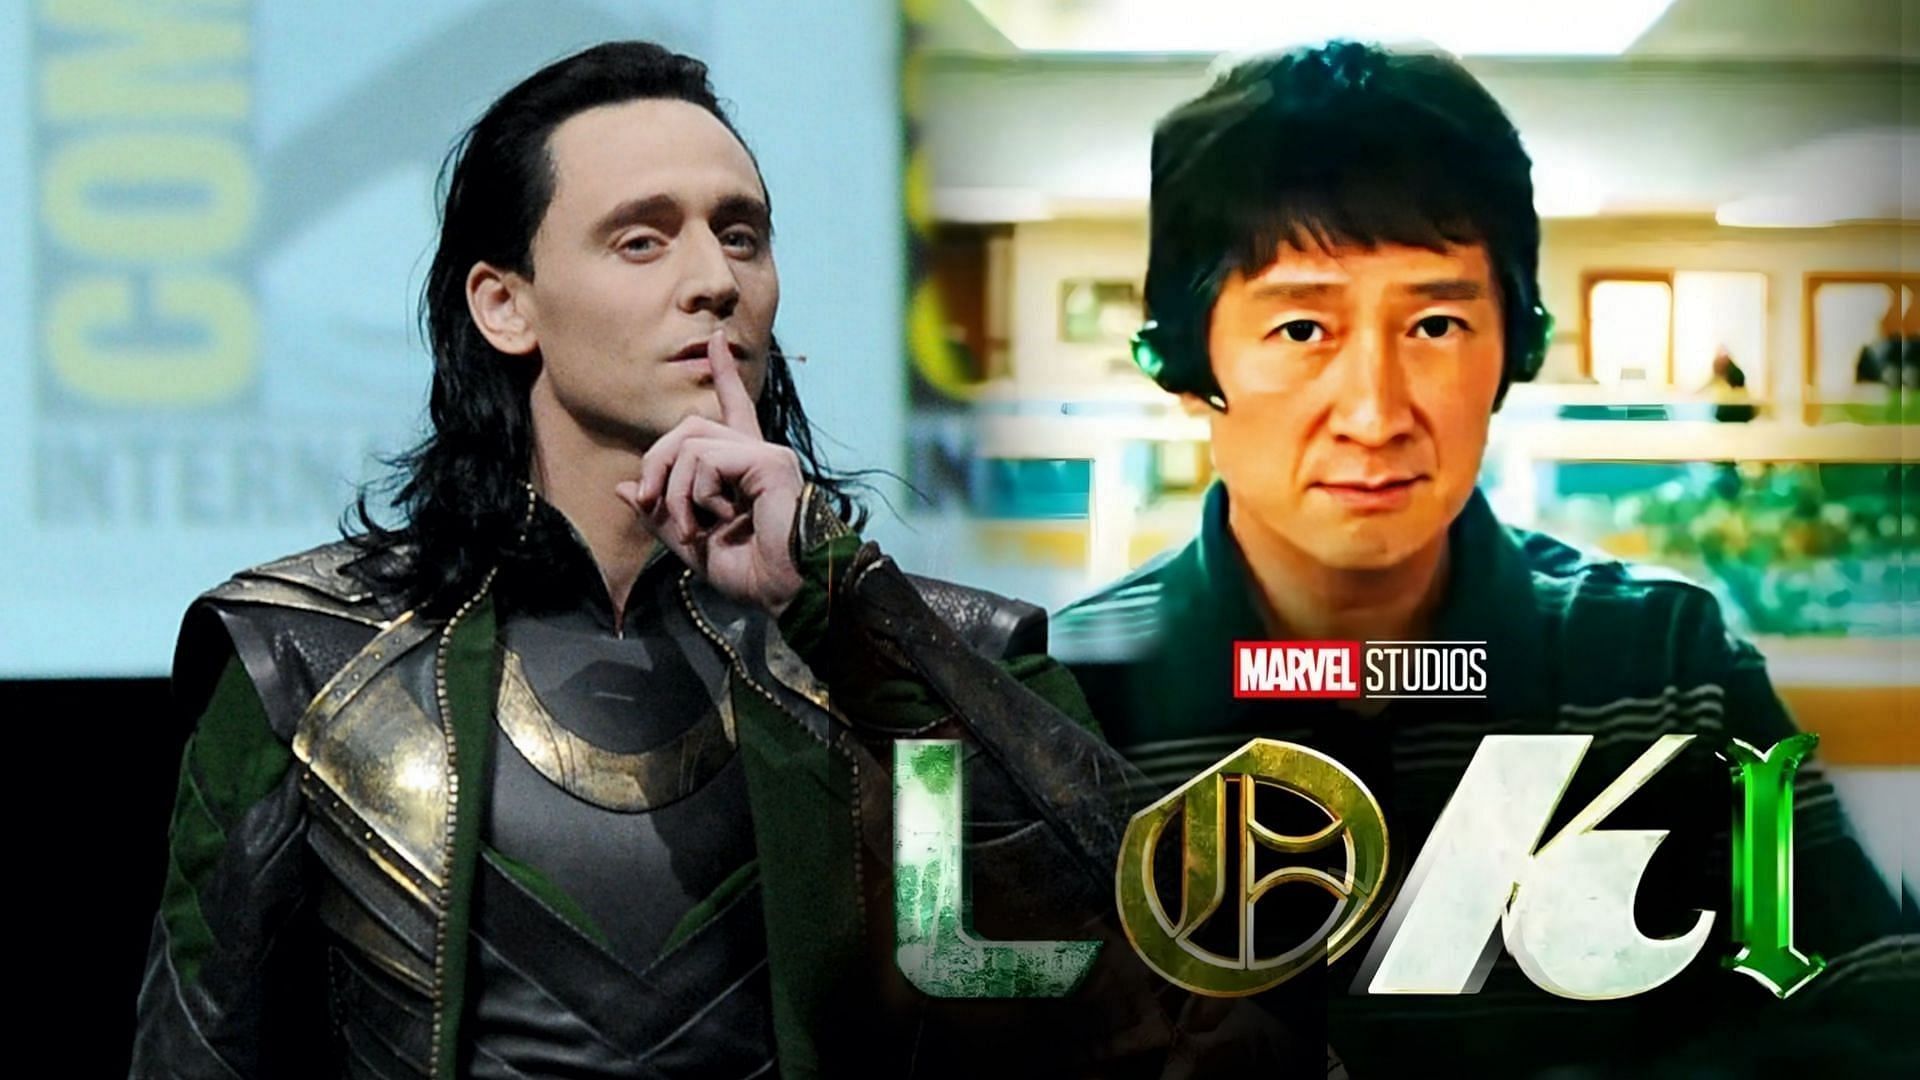 Loki season 2, the highly anticipated series on Disney+, has introduced a new character, Ouroboros. (Image via Sportskeeda)